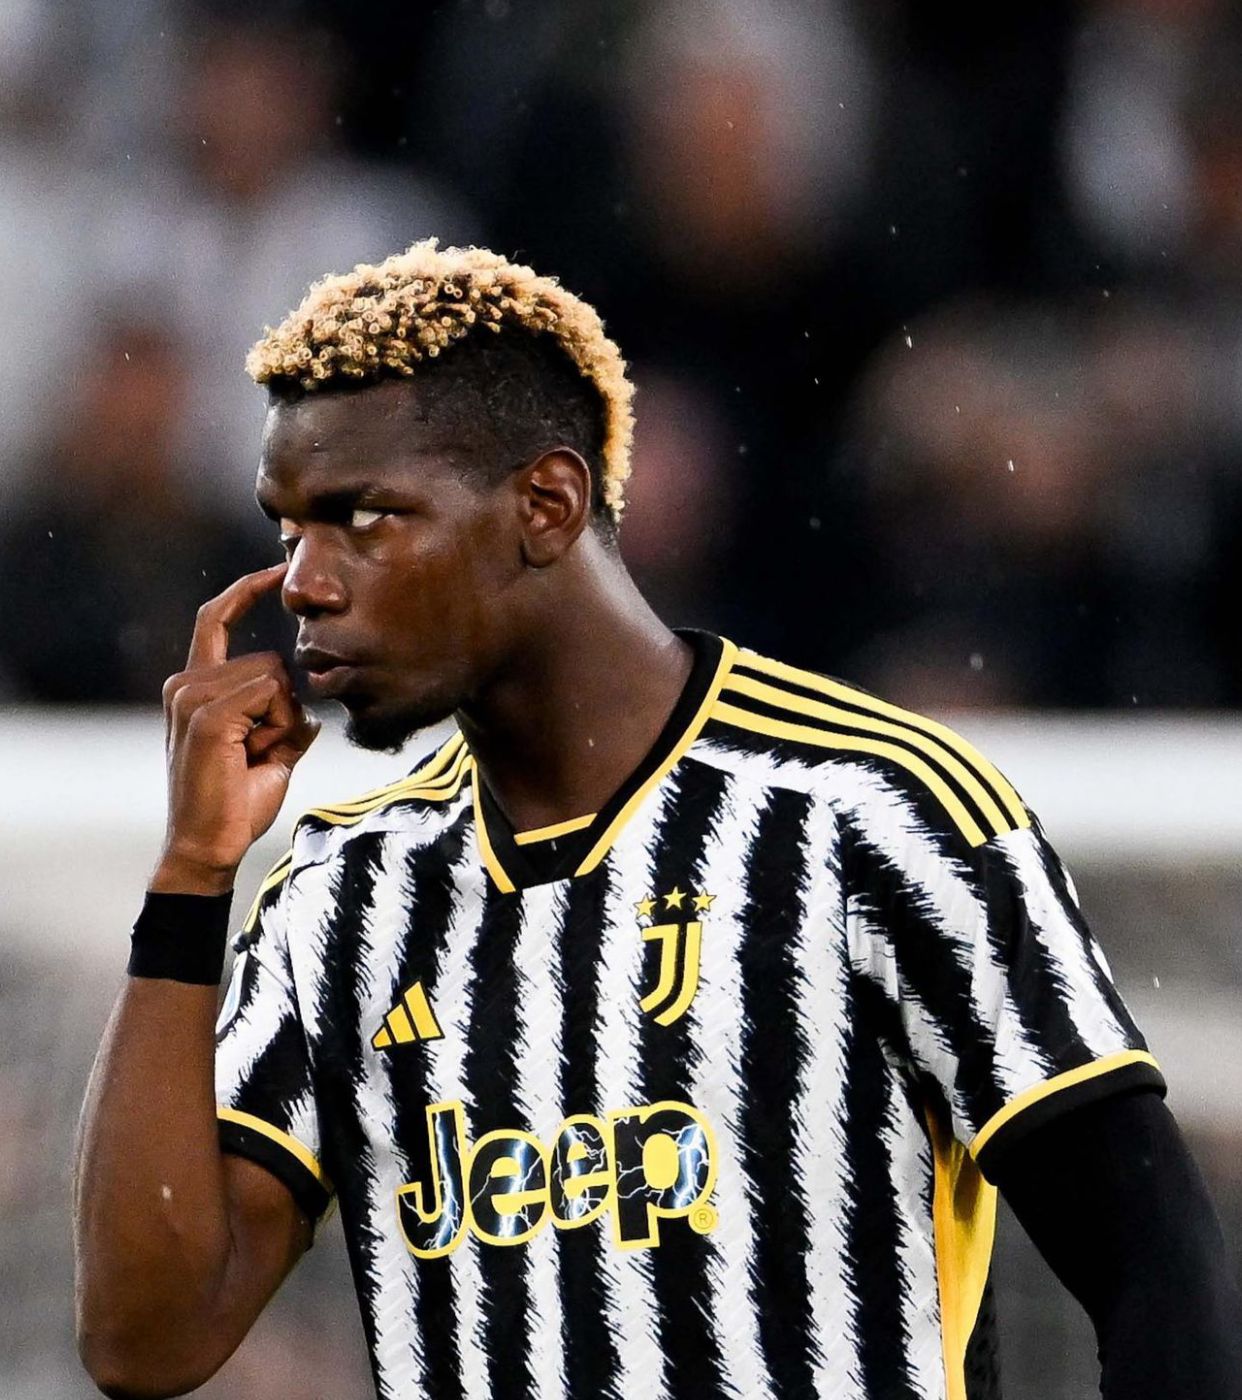 Cedera Berkali-kali, Juventus Bakal Tinjau Ulang Kontrak Paul Pogba